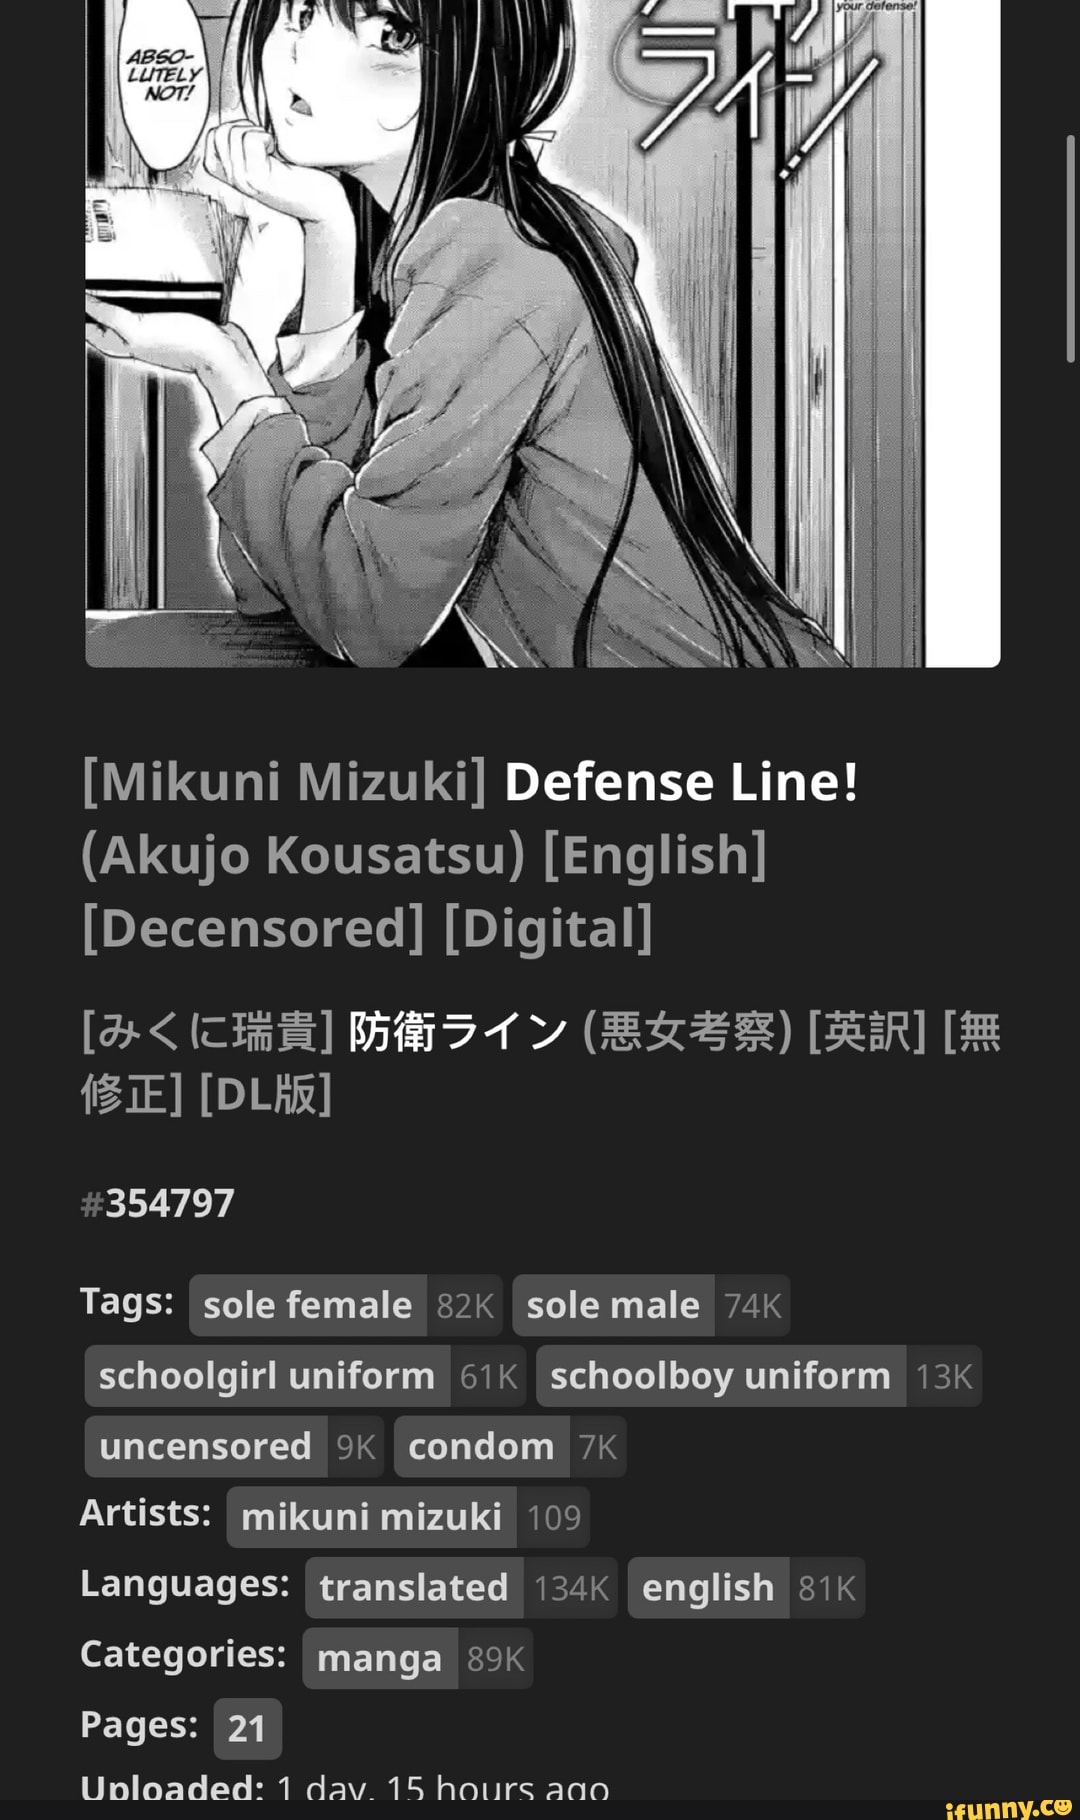 Mikuni Mizuki Defense Line Akujo Kousatsu English Decensored Digital Dlar s Sole Female Sole Male